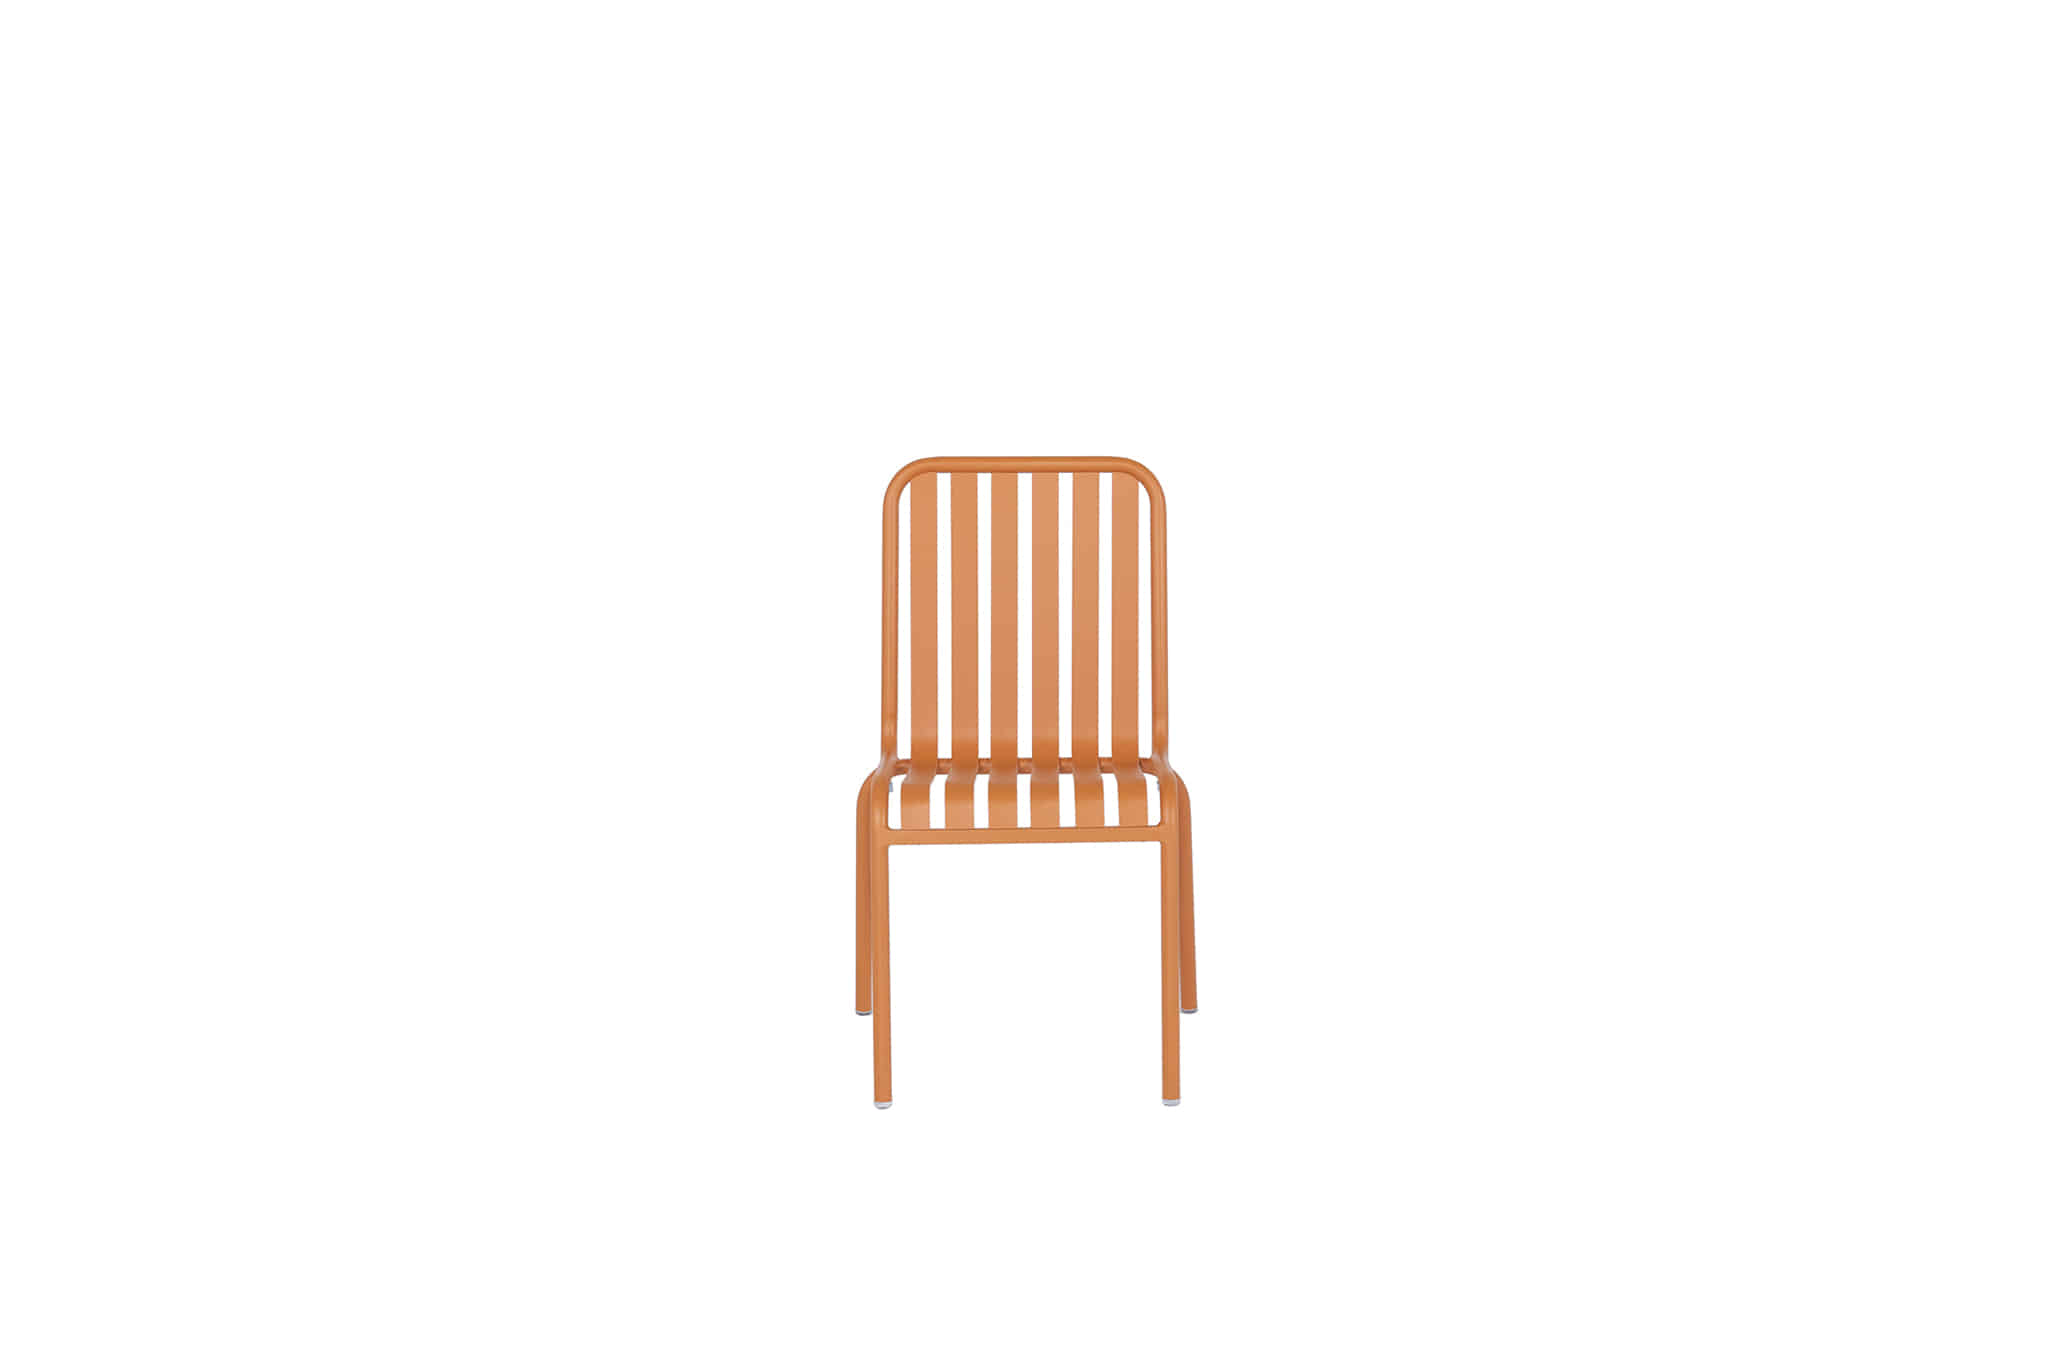 Docent Net_Dosent Net Dining Chair_Orange-pop